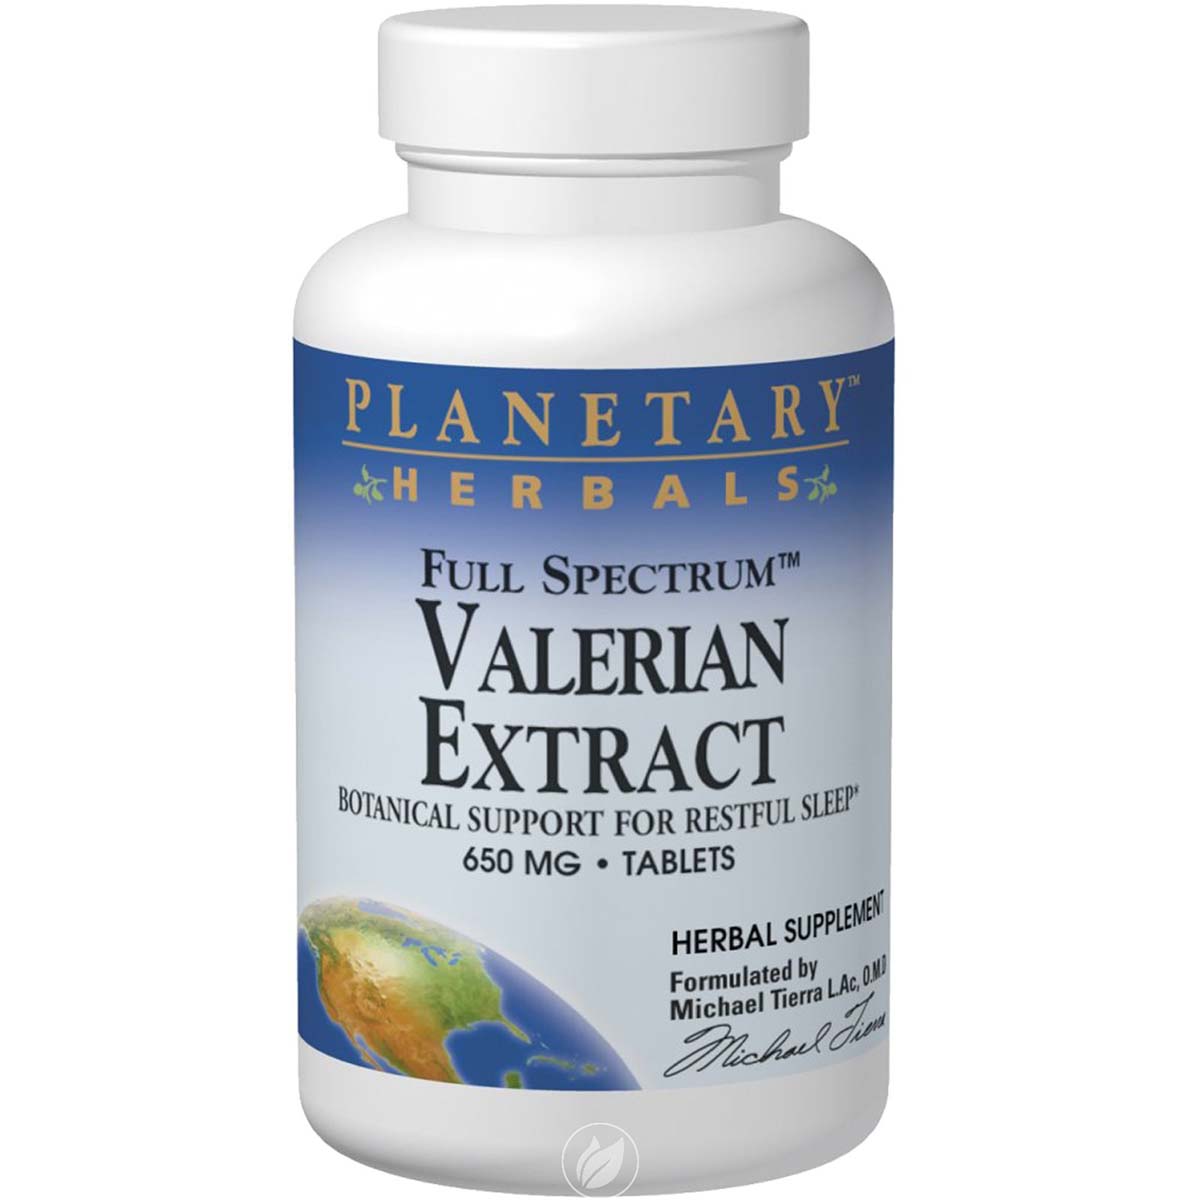 Planetary Herbals Valerian Extract Full Spectrum, 650 mg, 60 Tablets